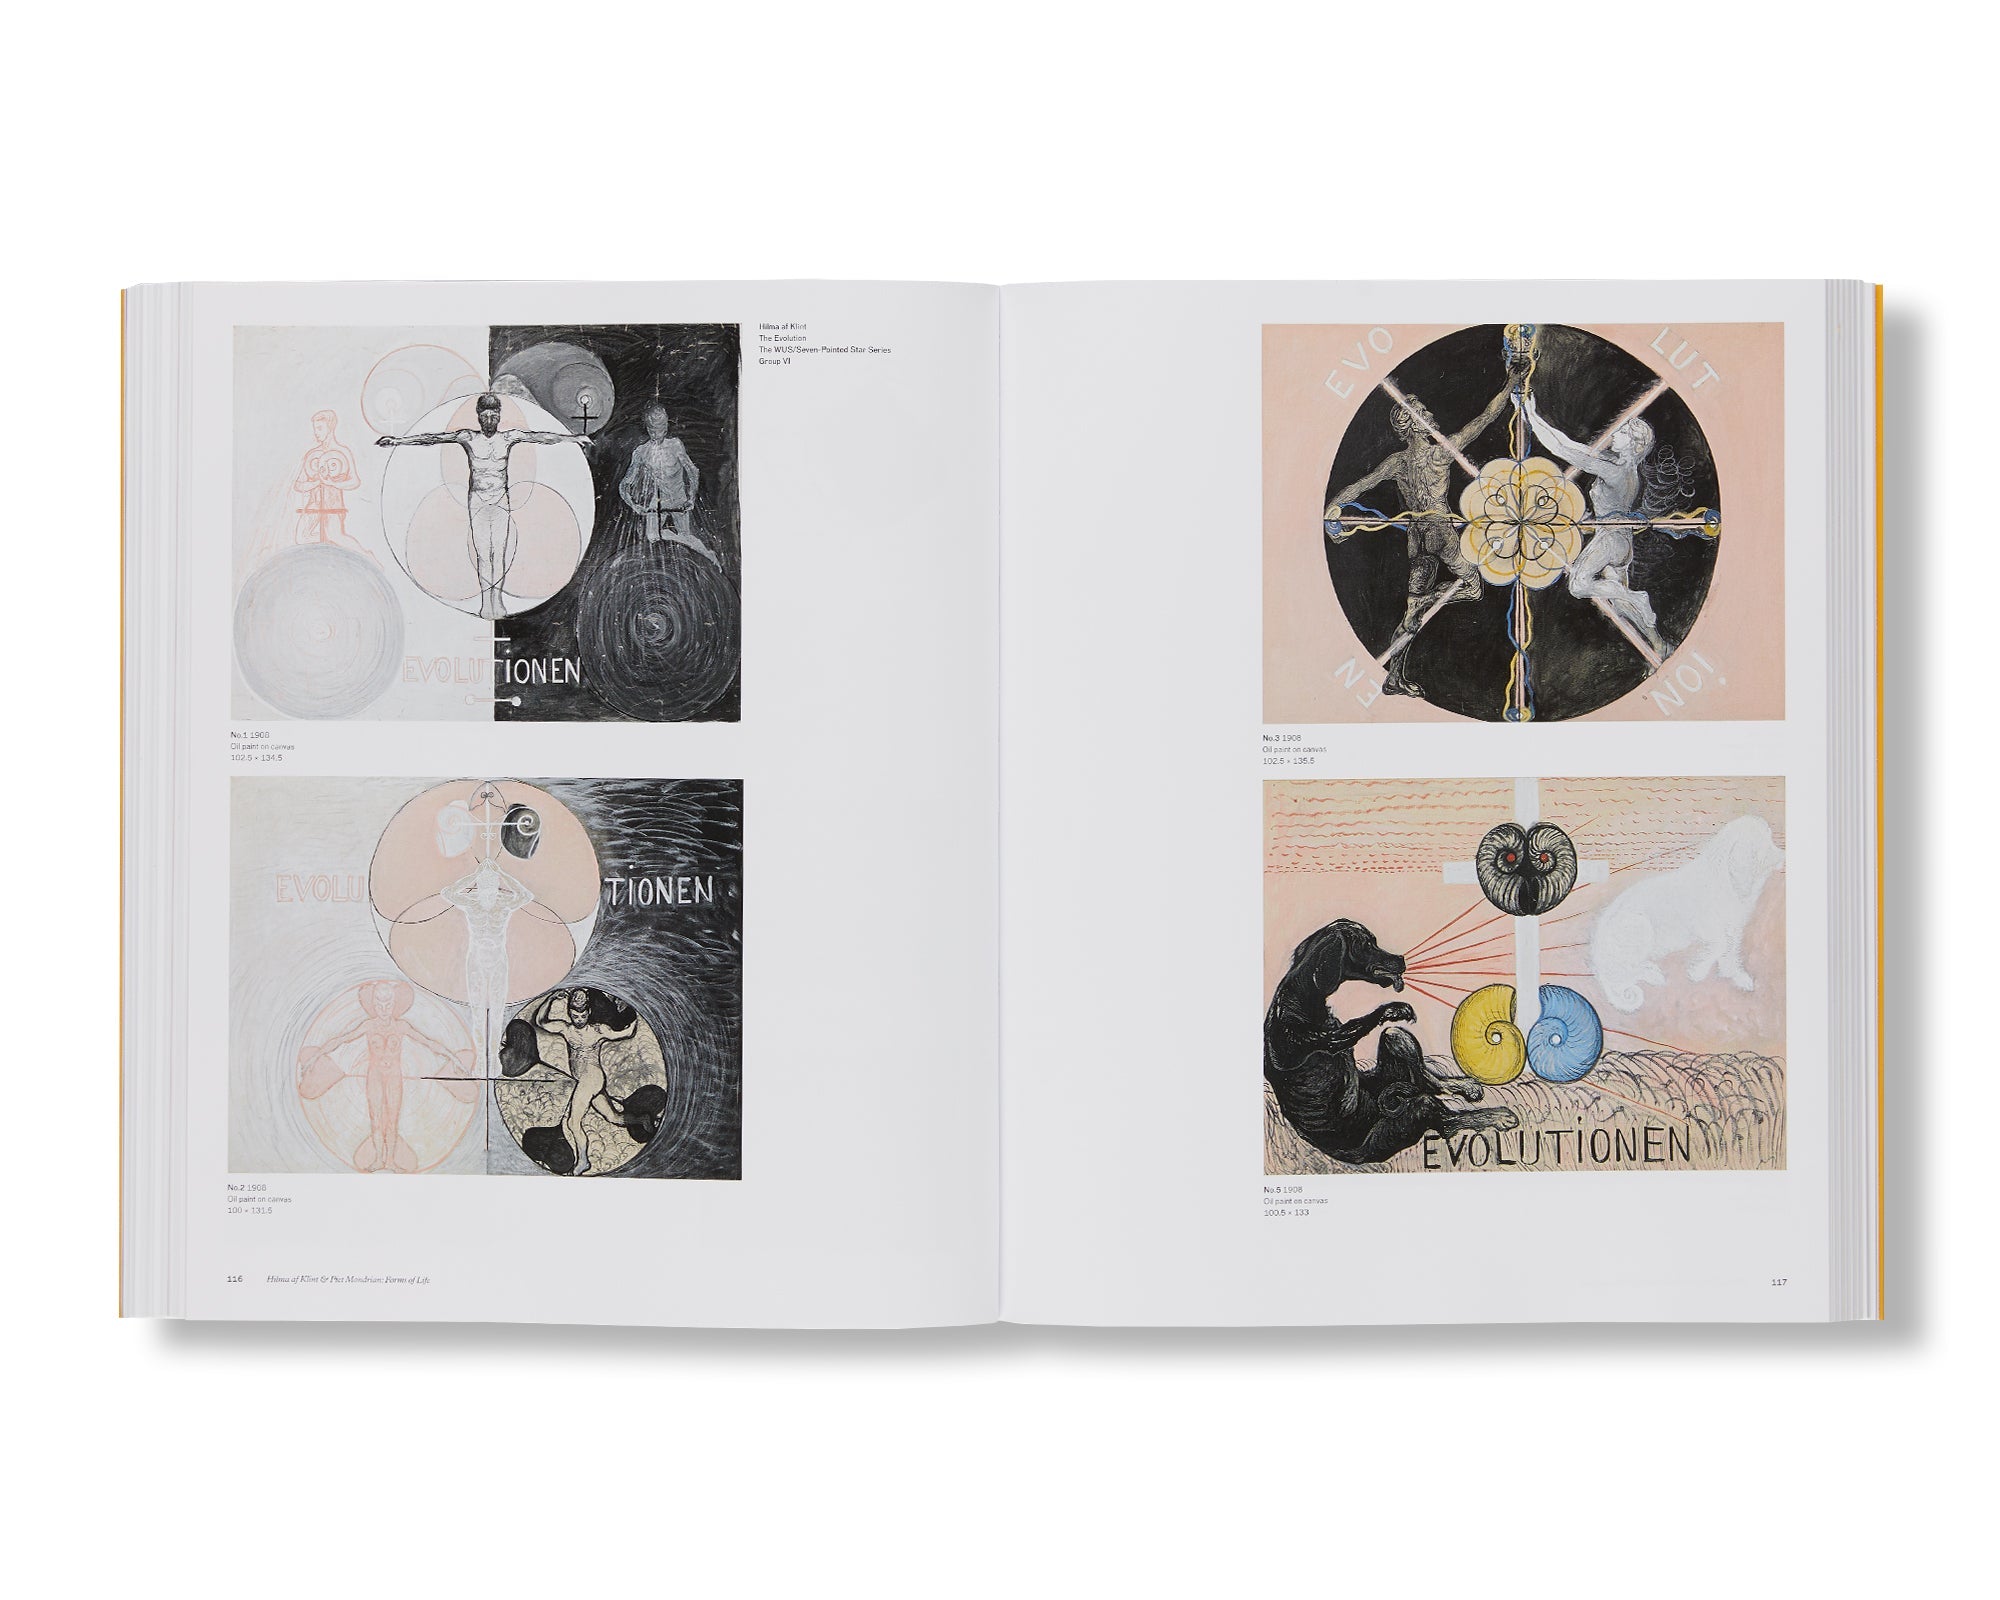 HILMA AF KLINT AND PIET MONDRIAN: FORMS OF LIFE by Hilma af Klint, Piet Mondrian [HARDCOVER]